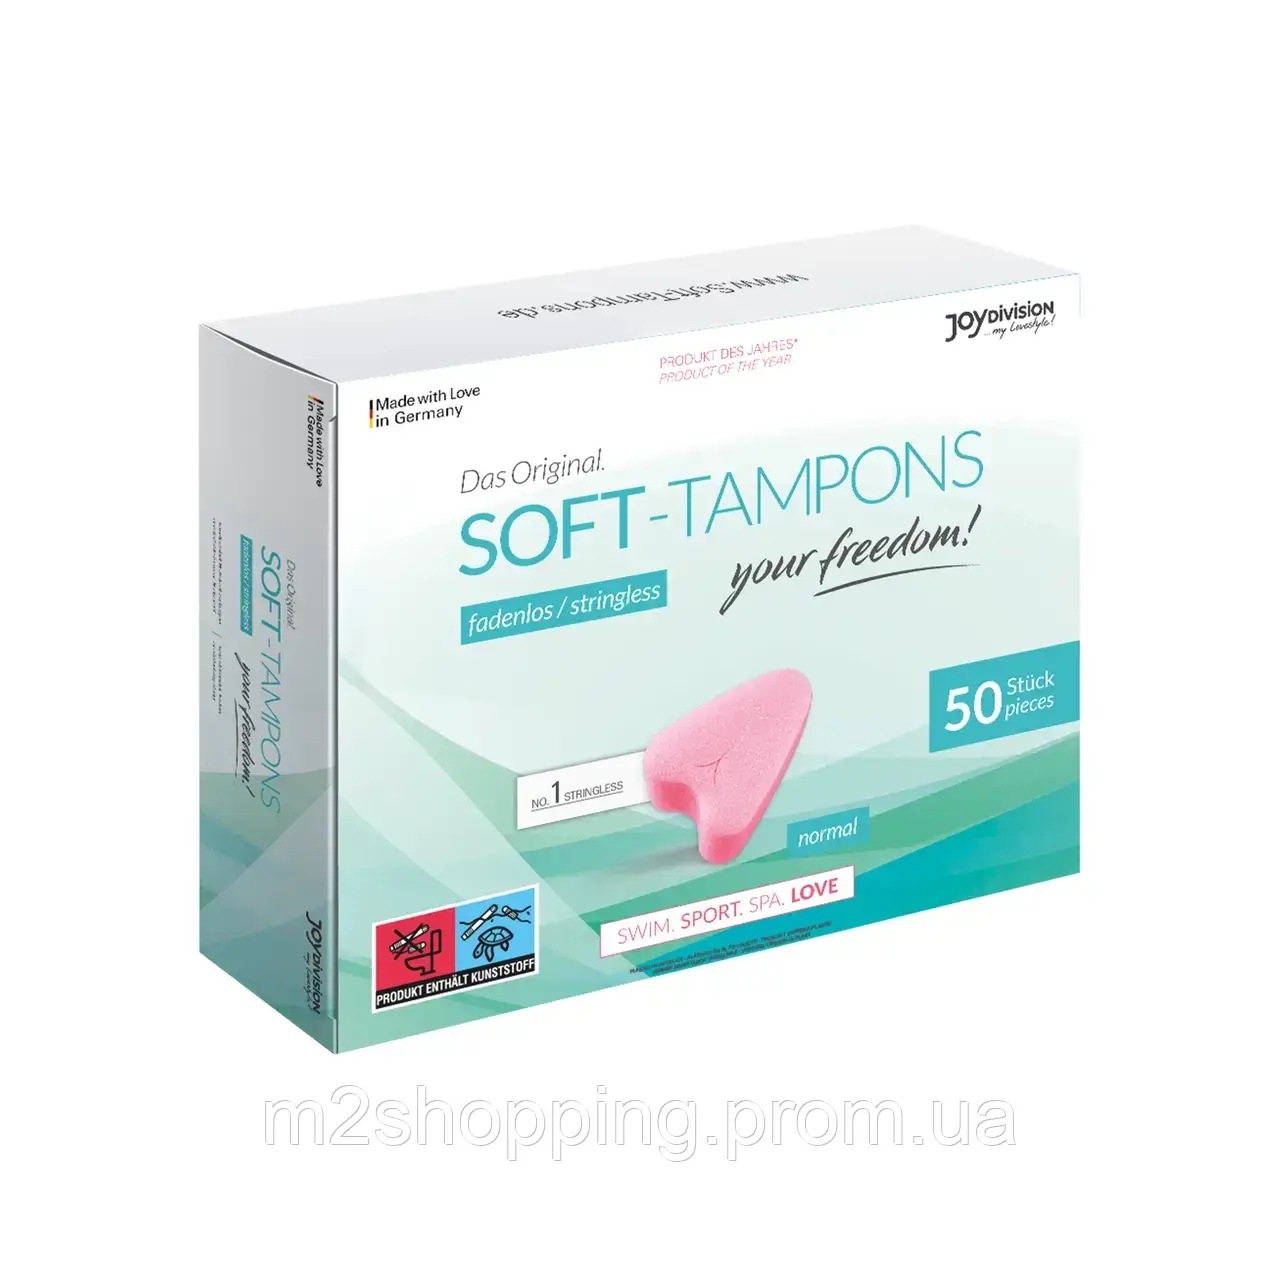 Жіночі гігієнічні м'які тампони - Soft-Tampons NORMAL JoyDivision, 50 шт.